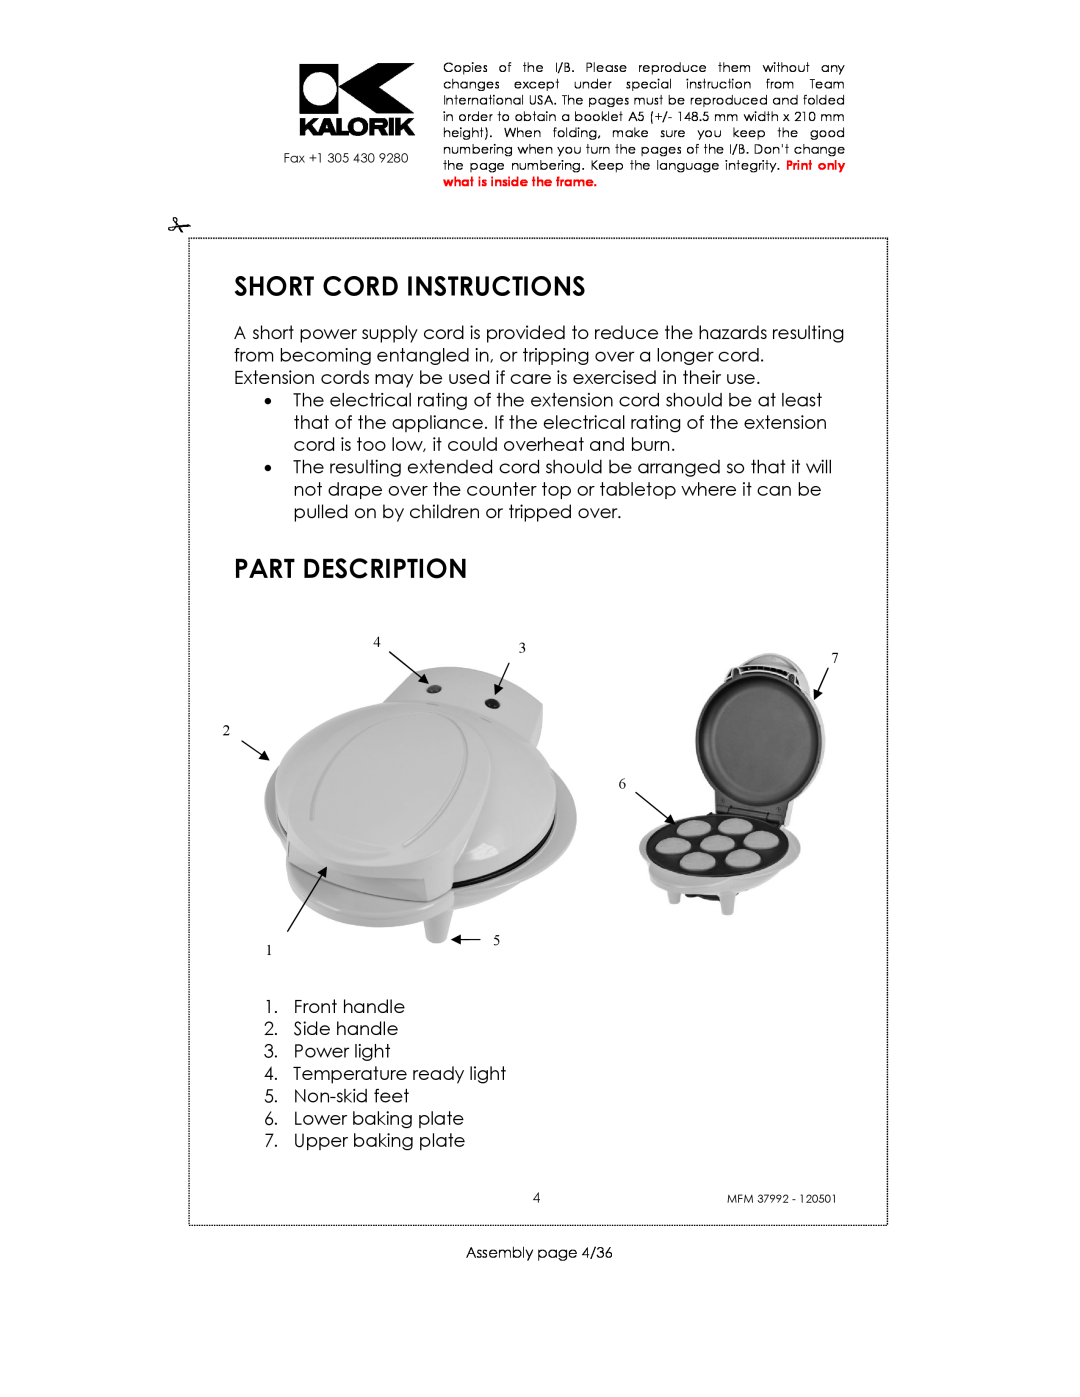 Kalorik MFM 37992 manual Short Cord Instructions, Part Description 